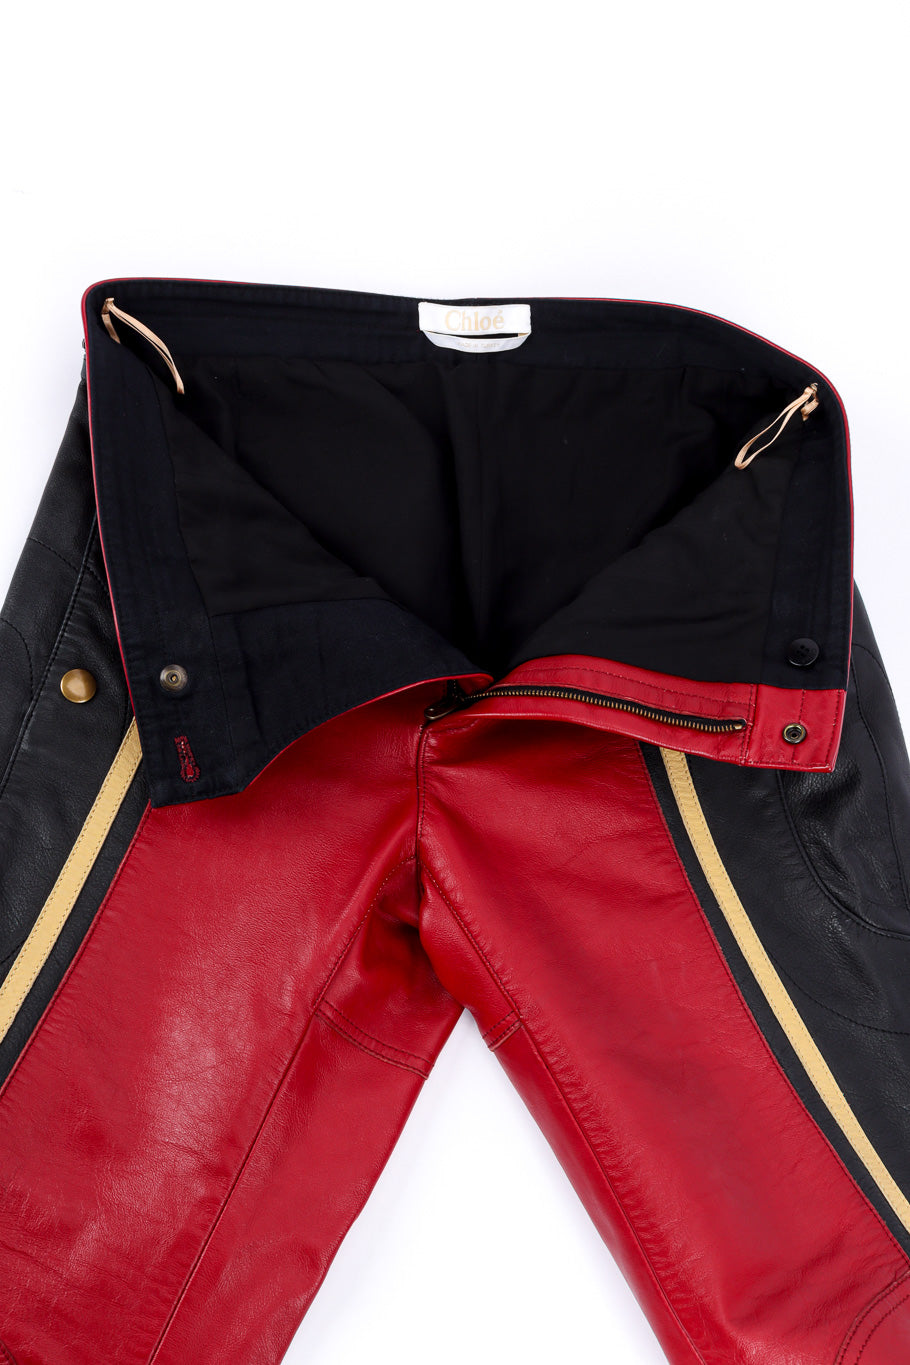 2016 F/W Leather Moto Pant by Chloe unzipped lining @recessla